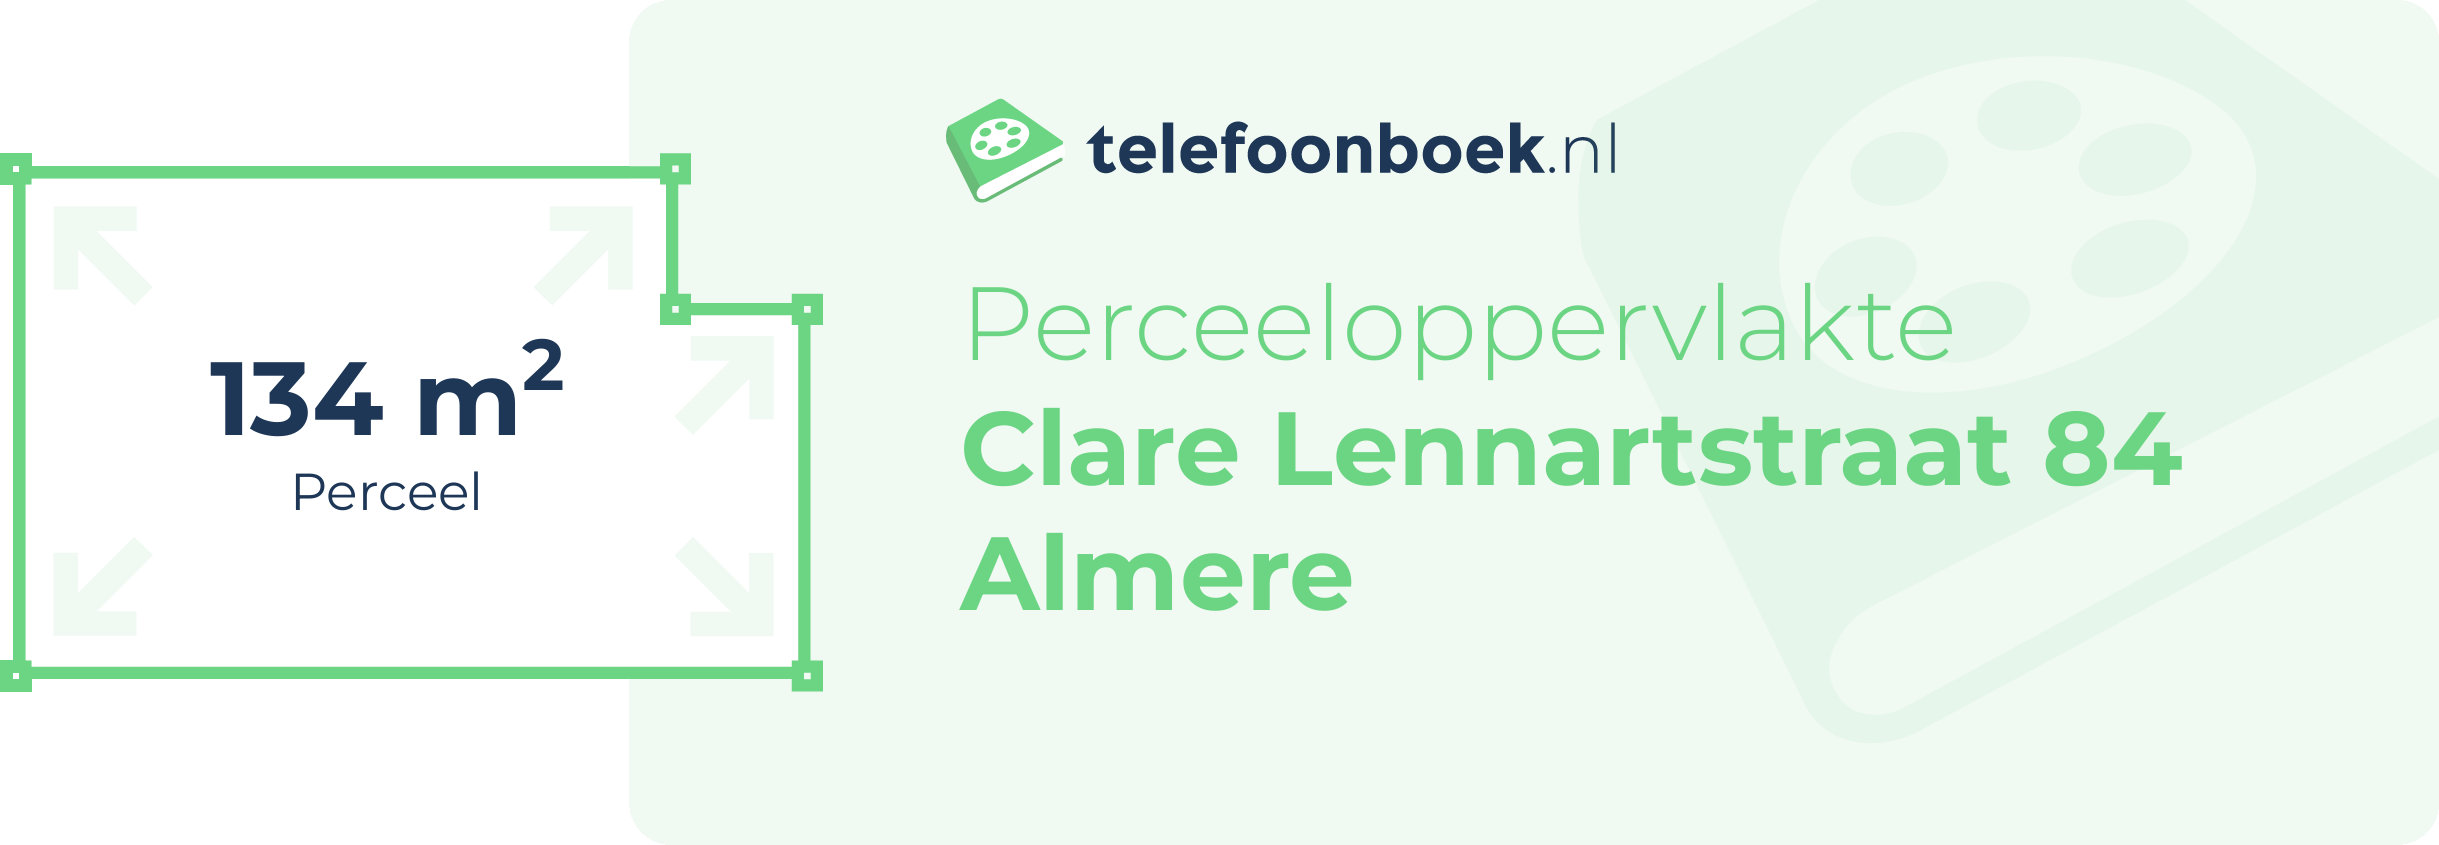 Perceeloppervlakte Clare Lennartstraat 84 Almere